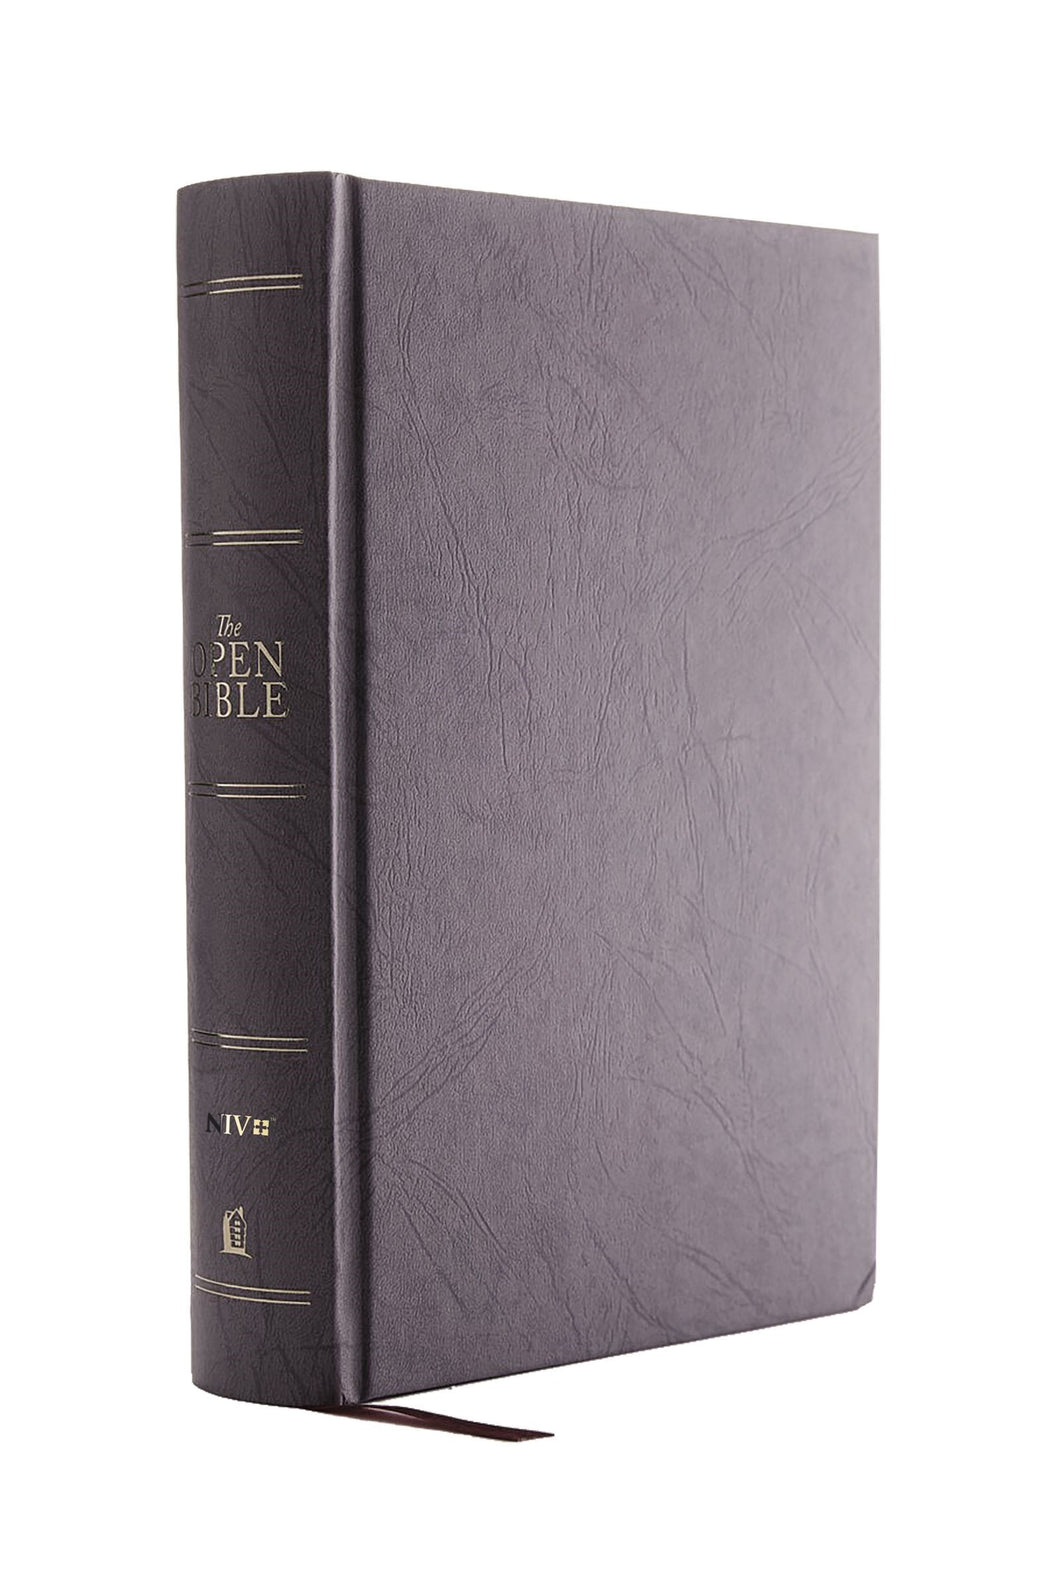 NIV The Open Bible (Comfort Print)-Hardcover